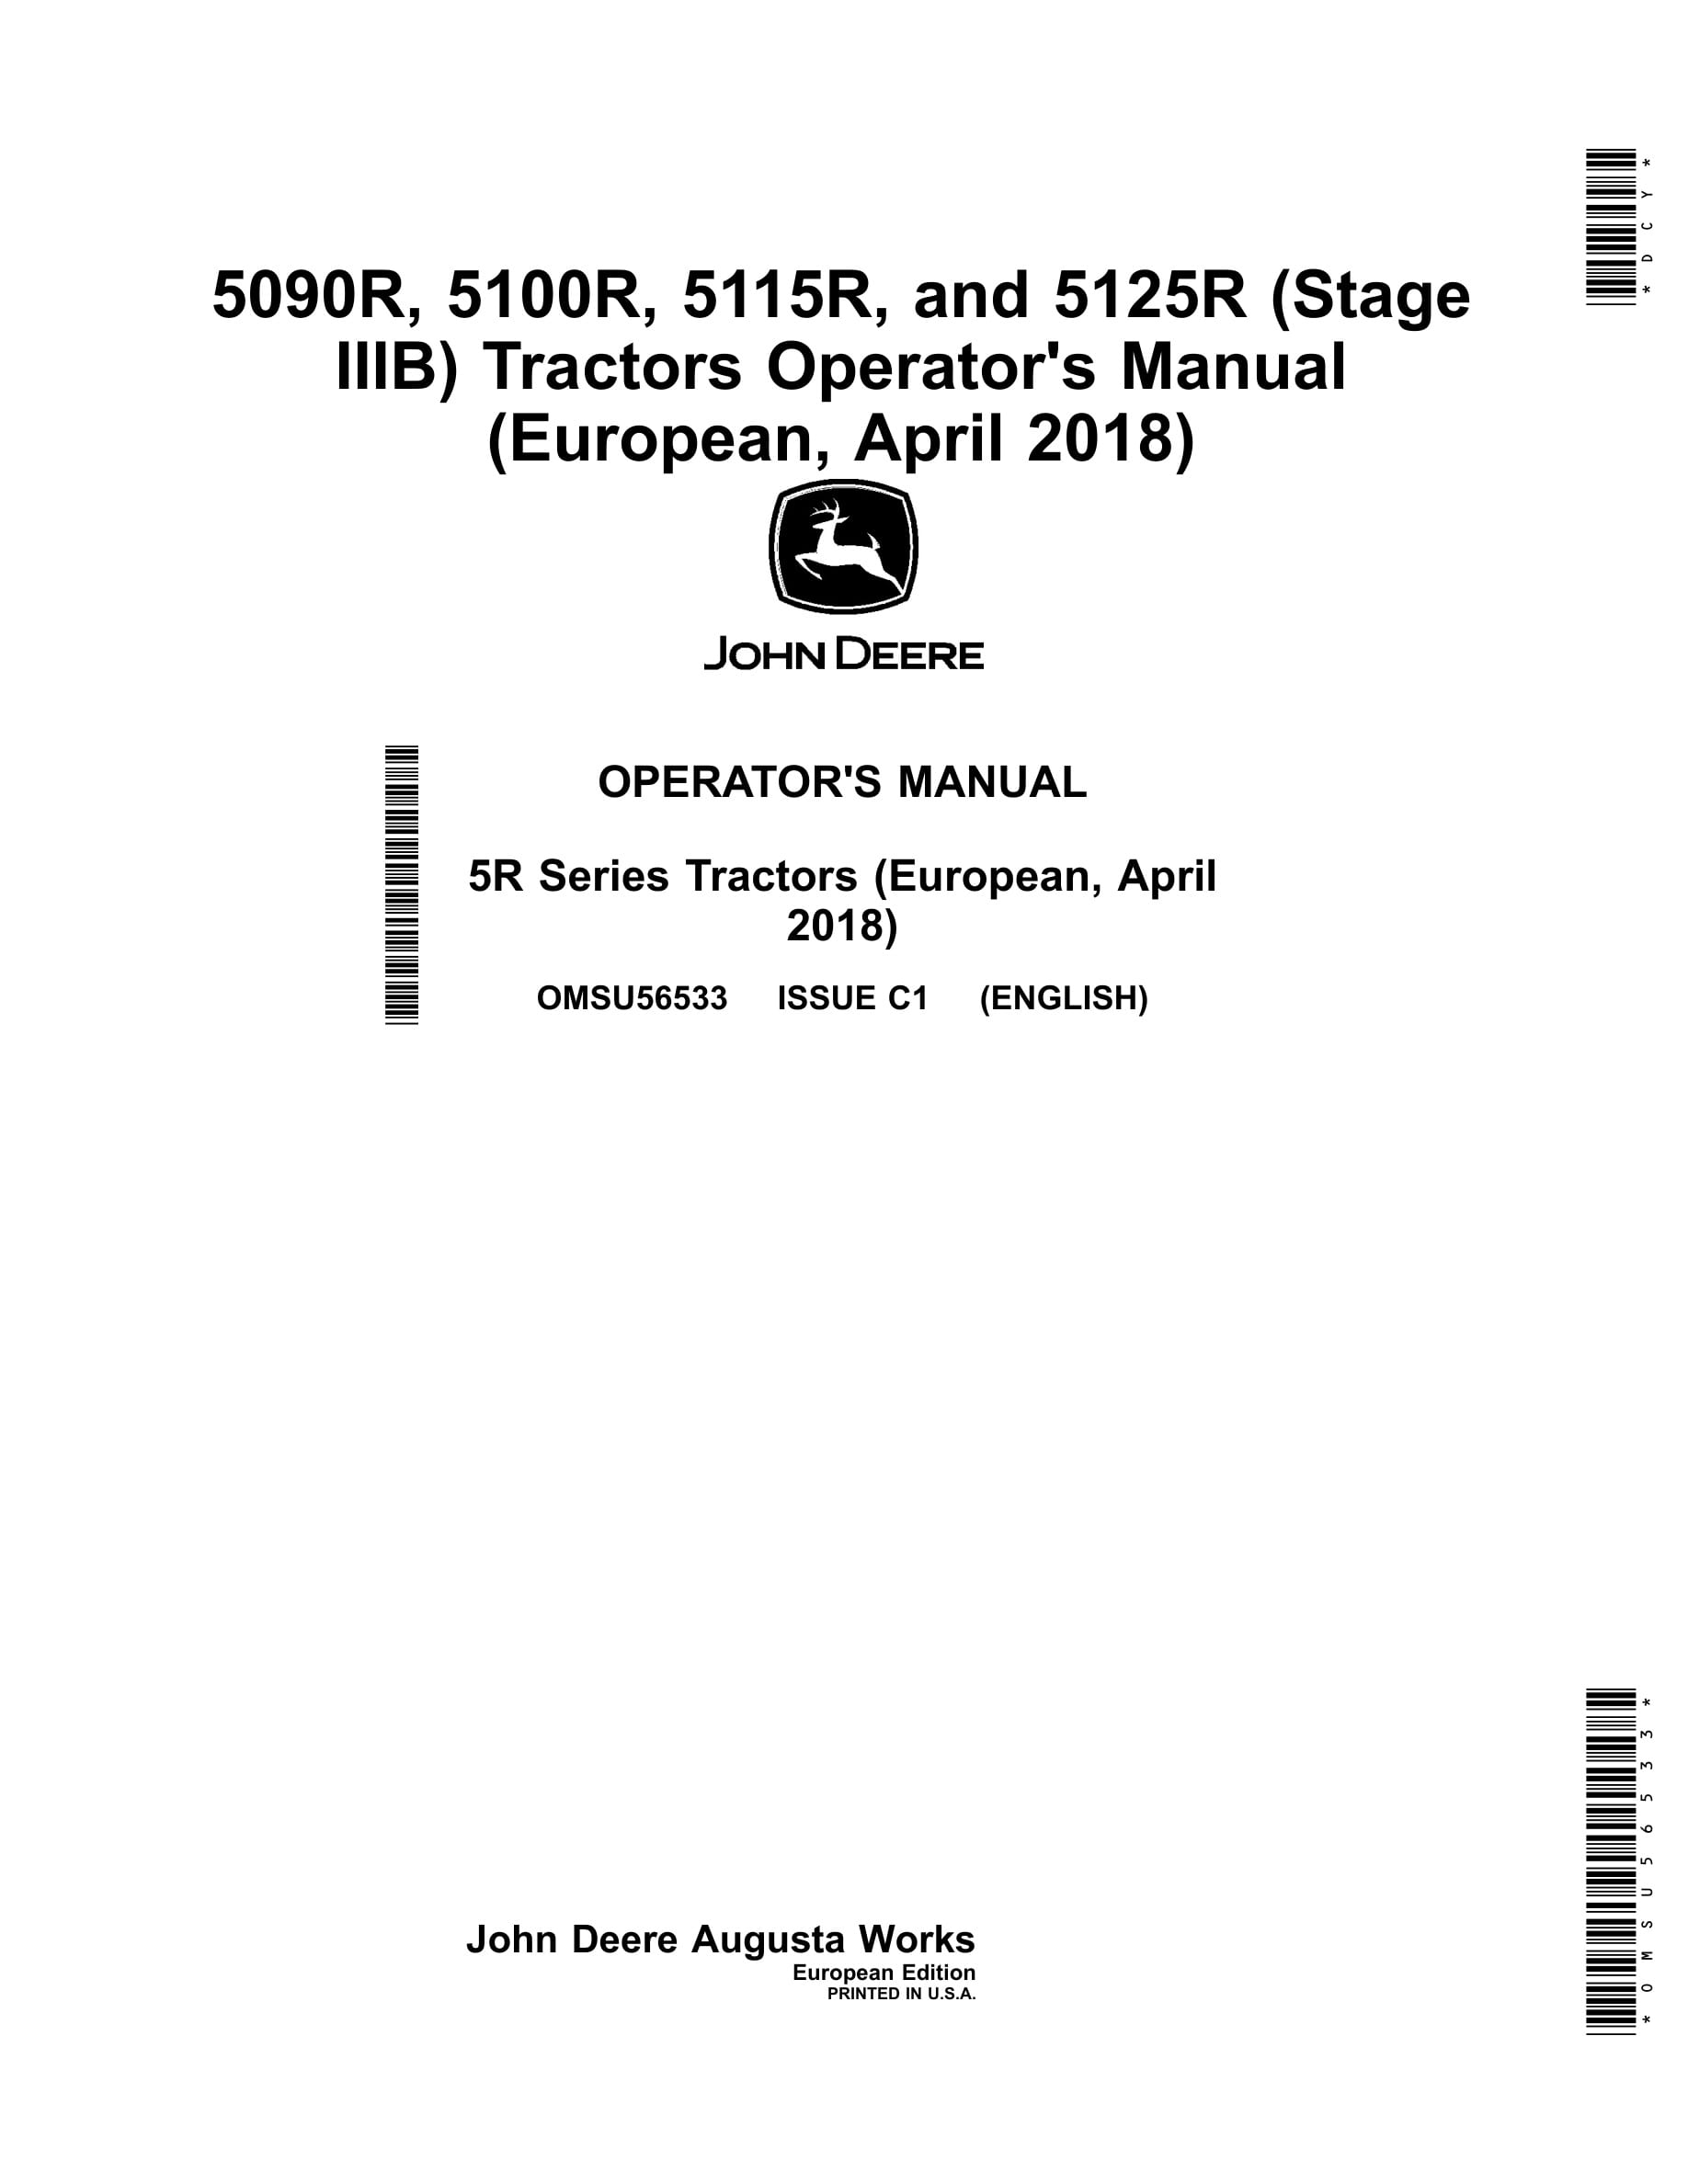 John Deere 5090r, 5100r, 5115r, And 5125r (stage Iiib) Tractors Operator Manuals OMSU56533-1